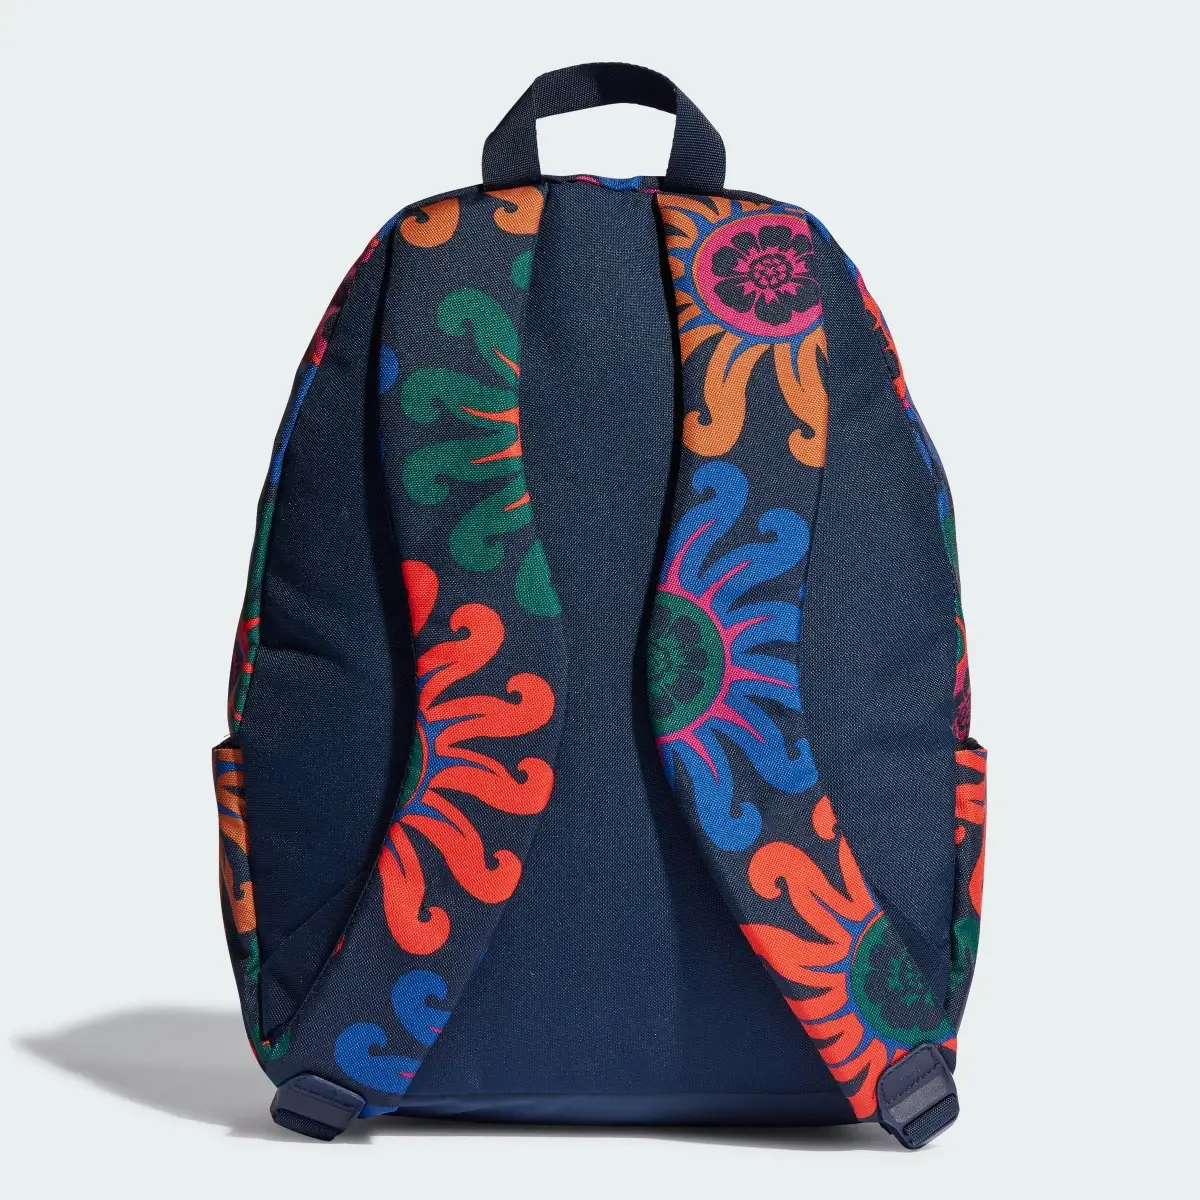 Adidas x FARM Backpack. 3